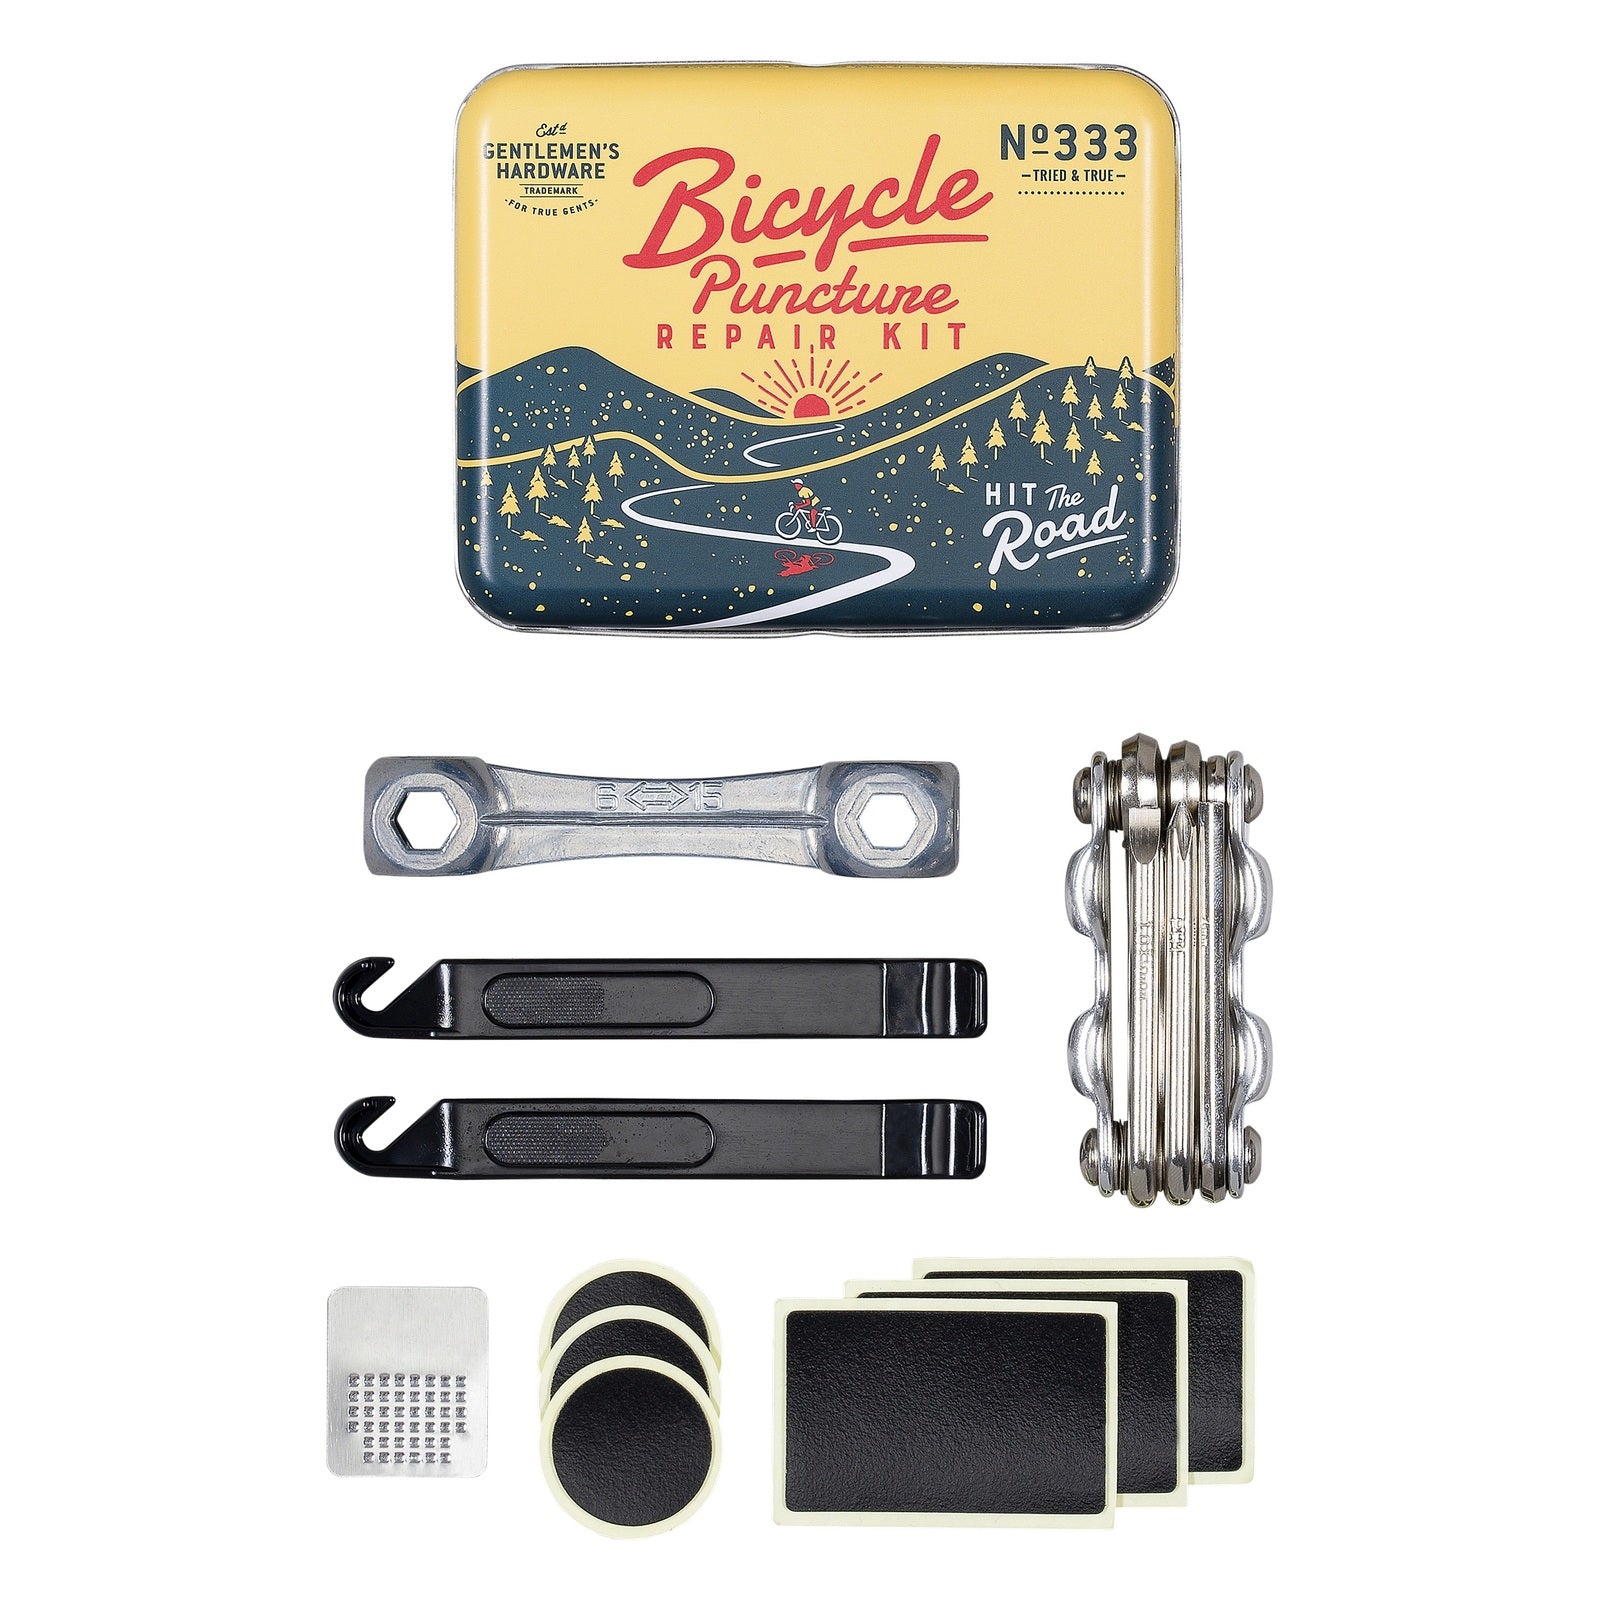 Gentlemen's Hardware: Bicycle Repair Kit